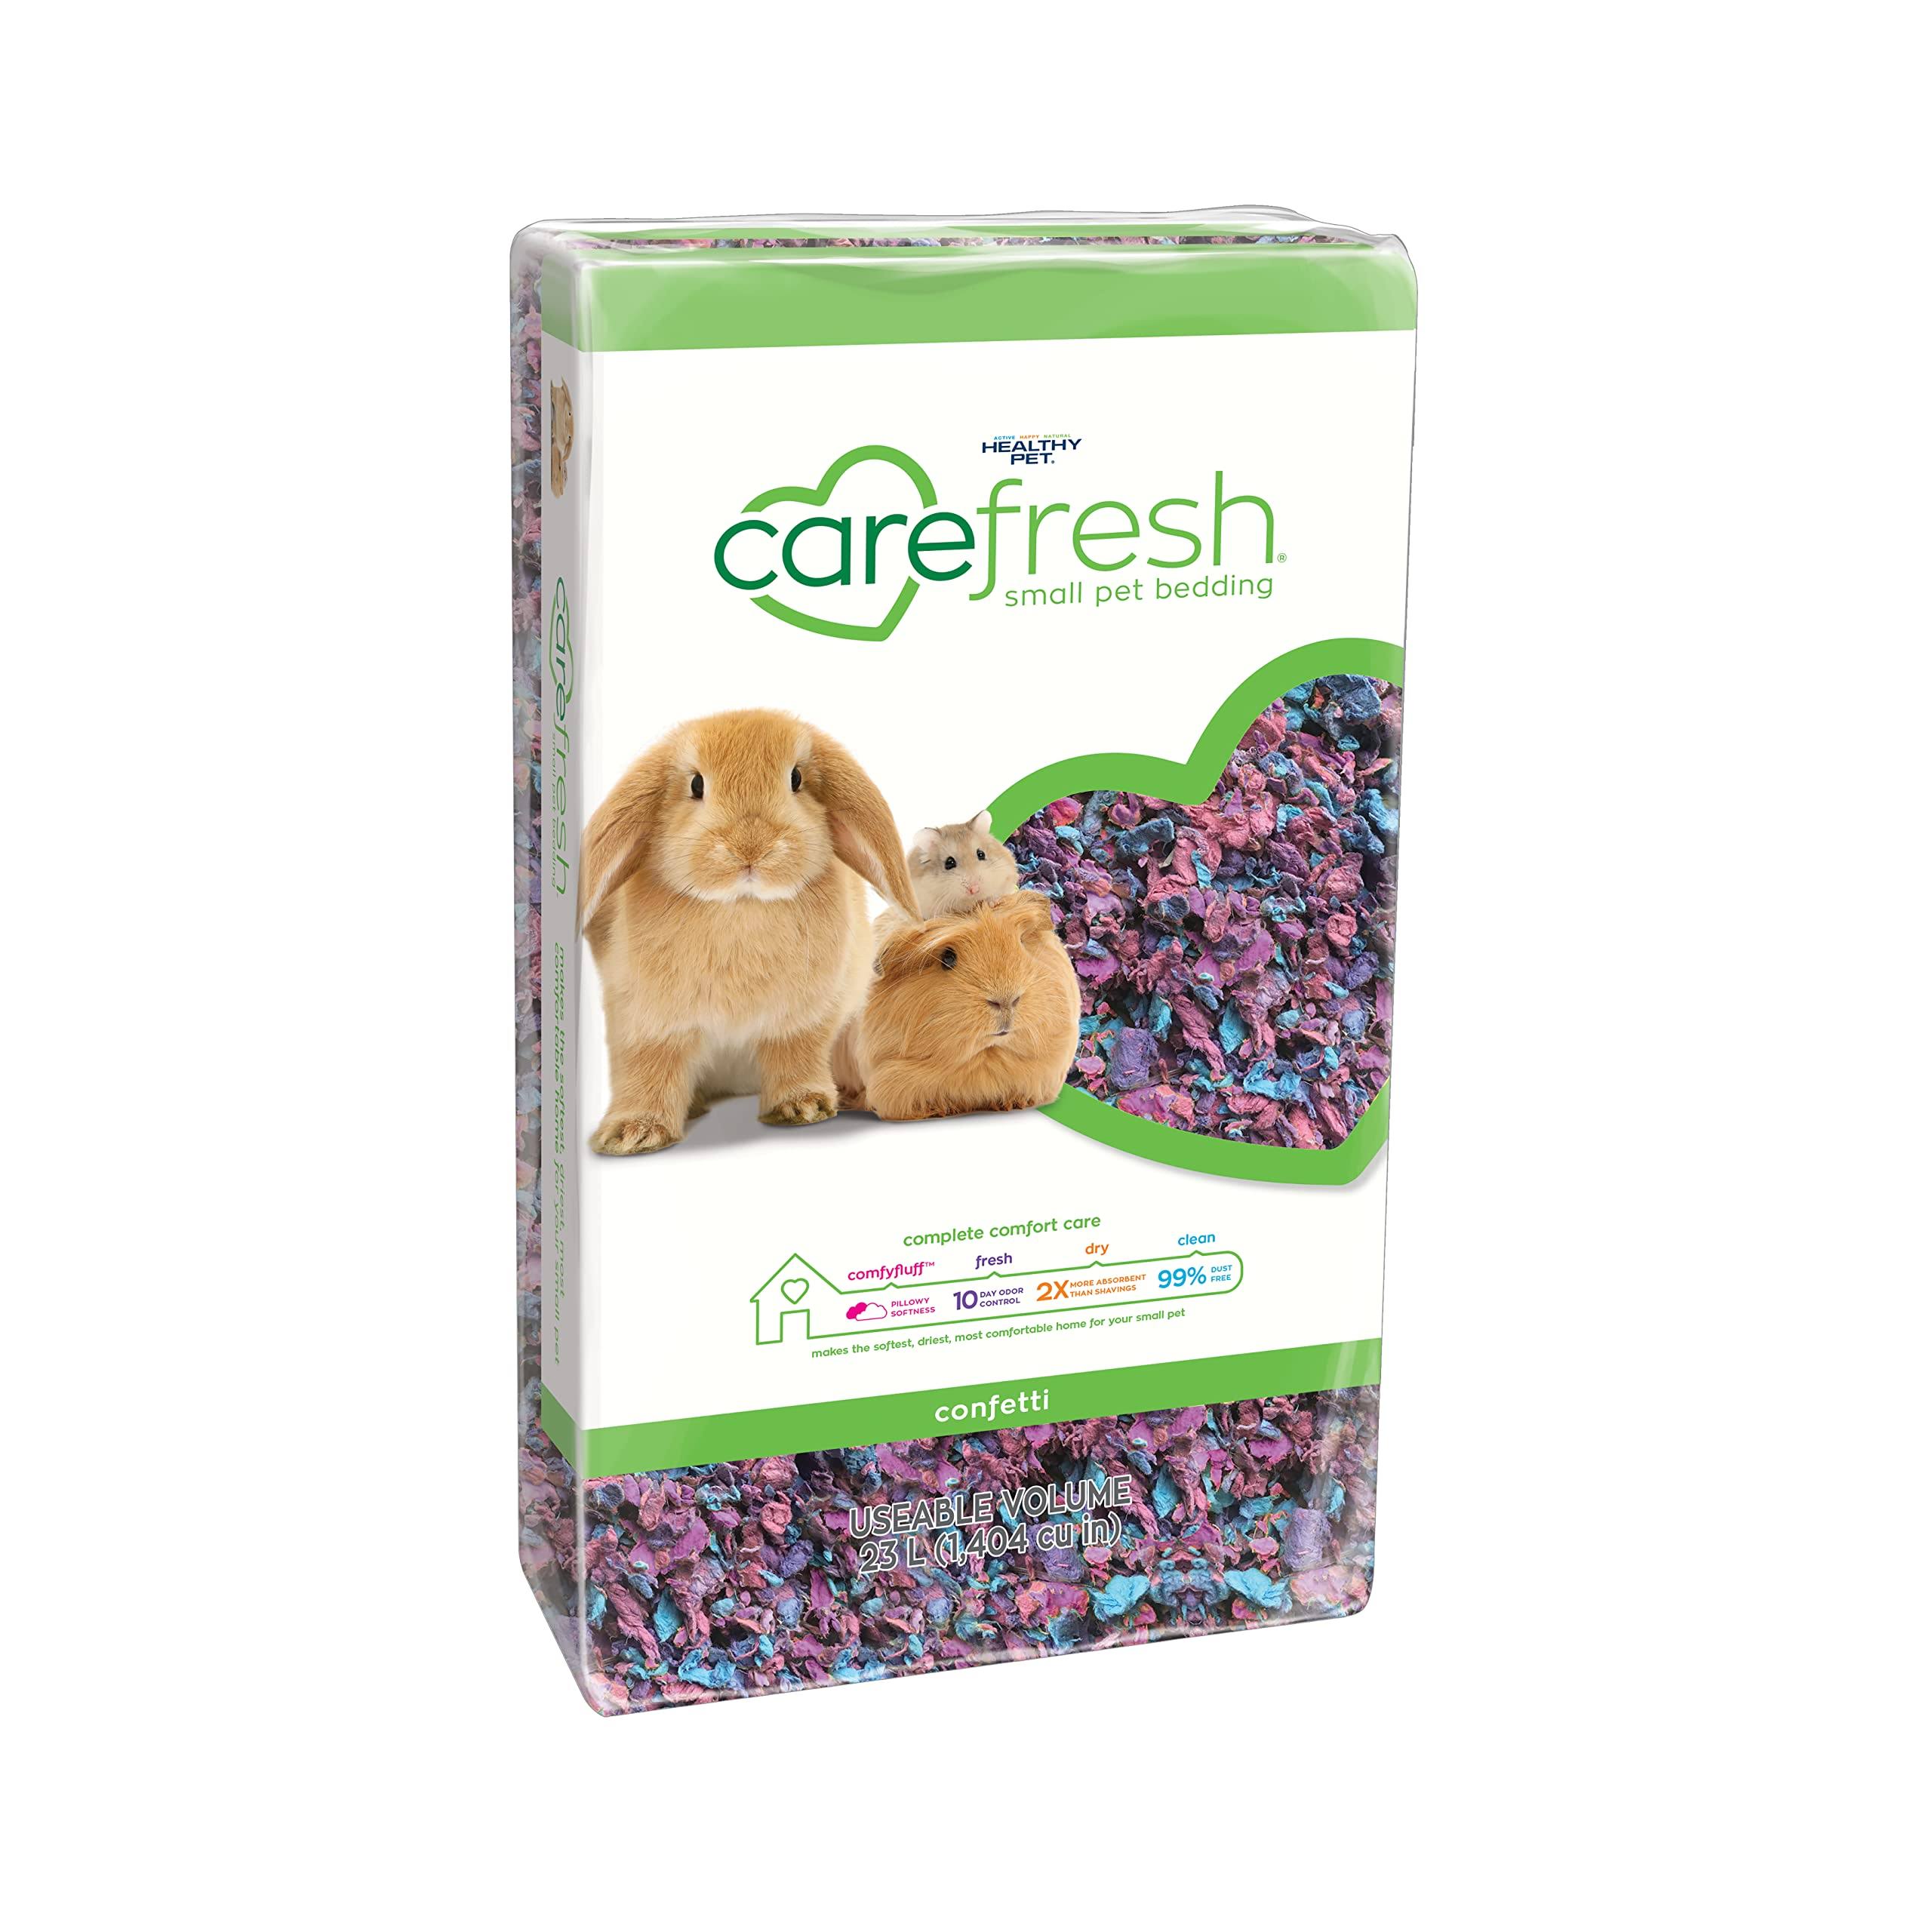 Carefresh Confetti Soft Pet Bedding